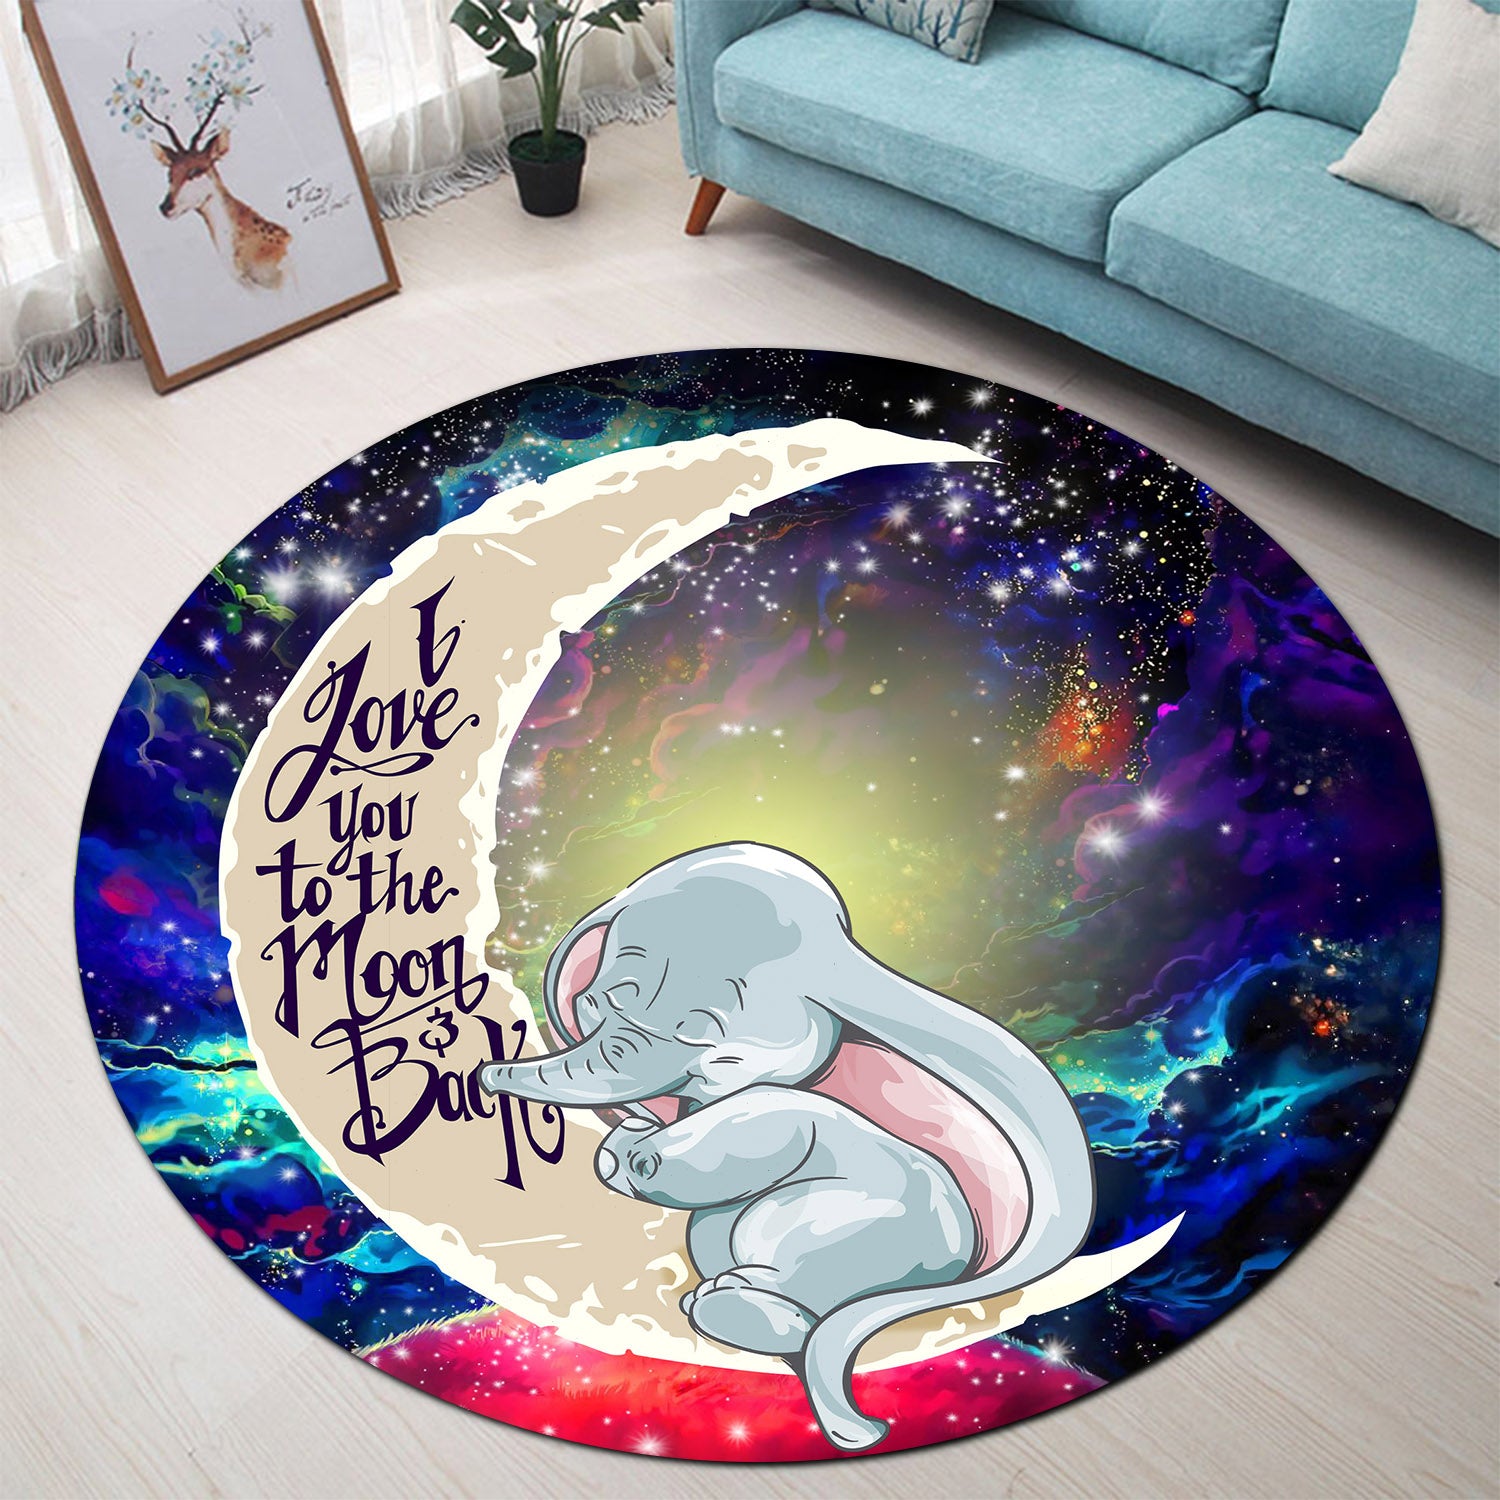 Dumbo Elephant Love You To The Moon Galaxy Round Carpet Rug Bedroom Livingroom Home Decor Nearkii